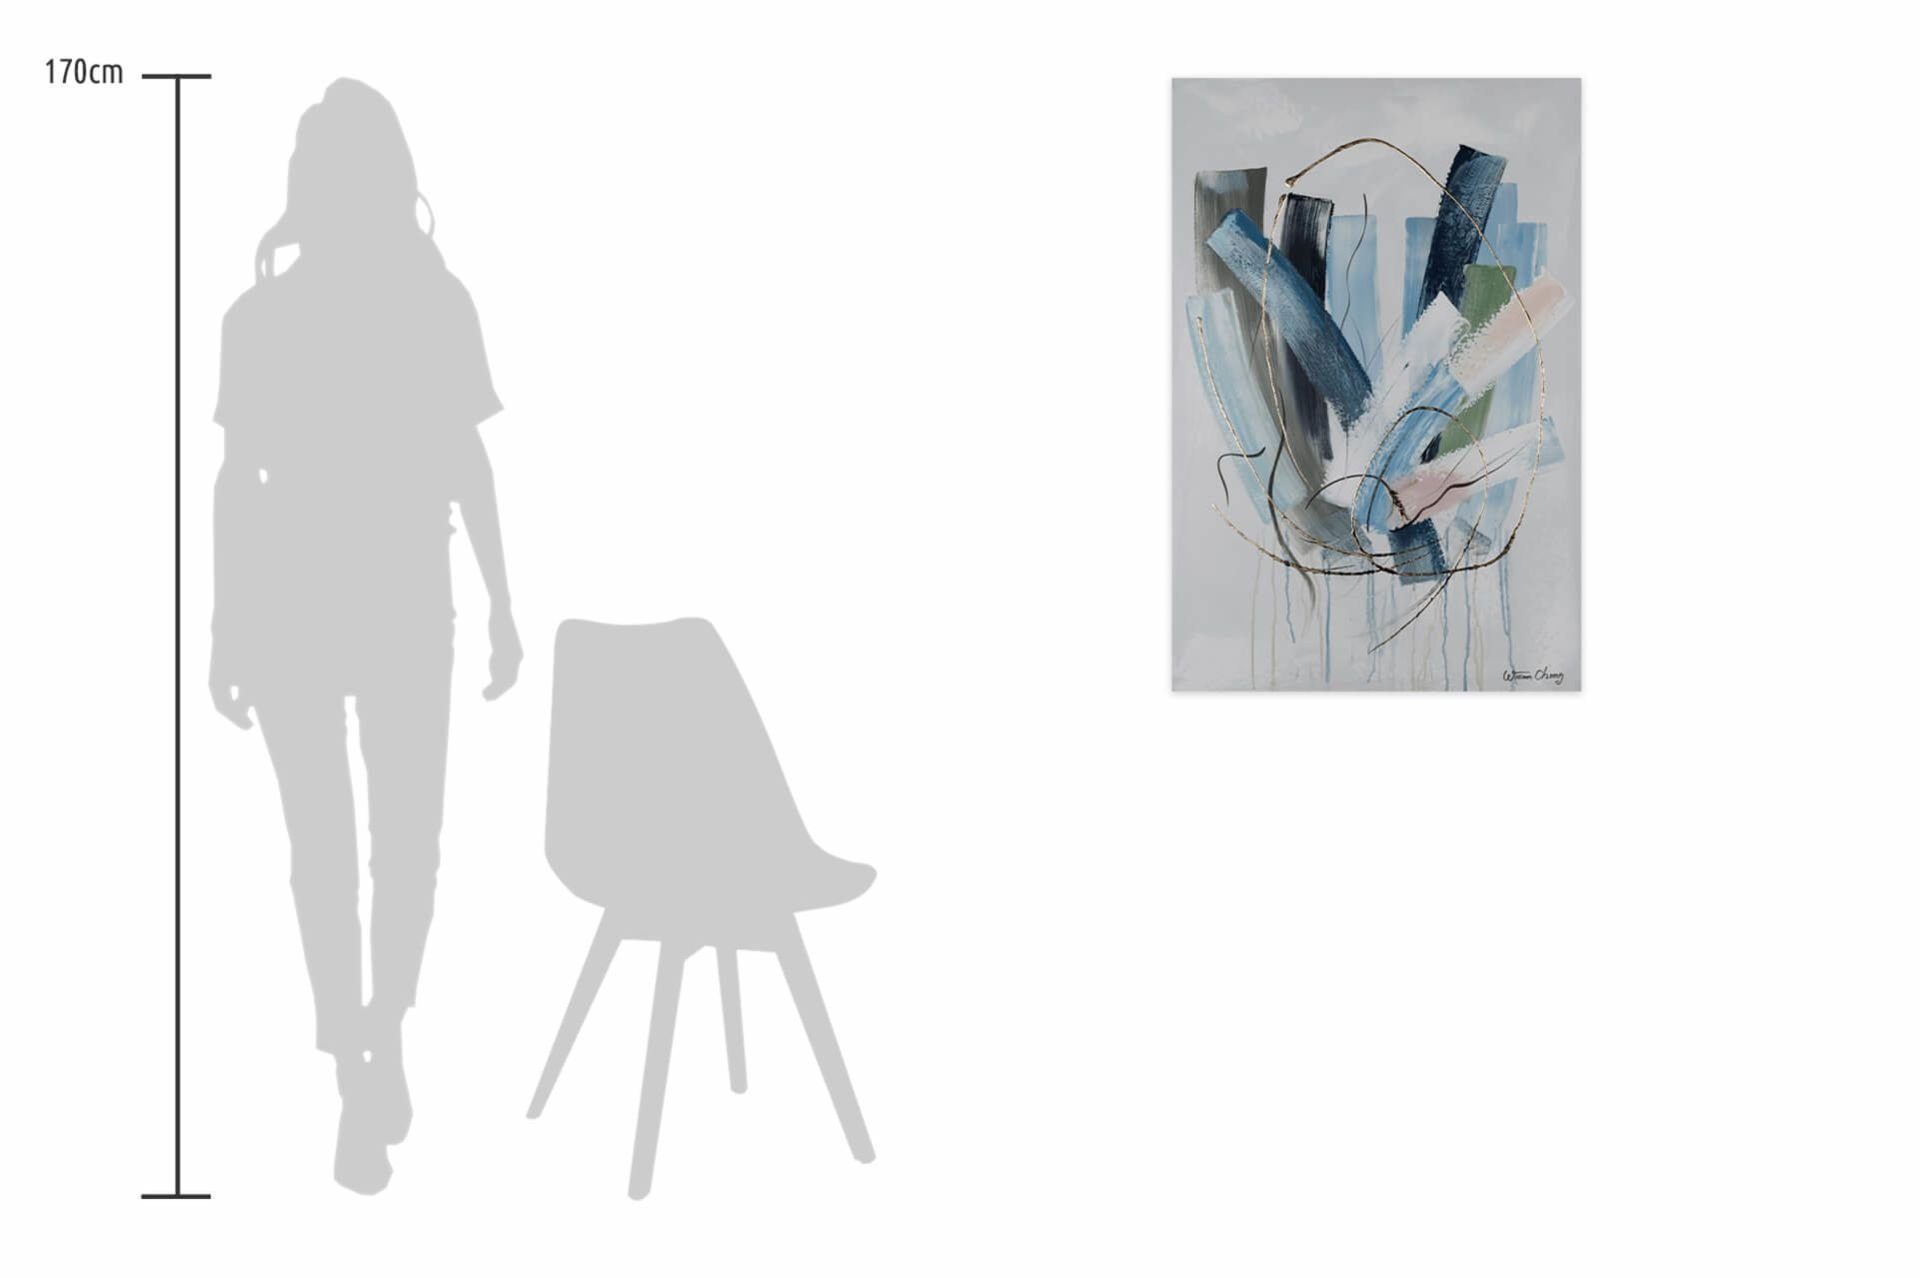 HANDGEMALT Wandbild Crystal Leinwandbild 100% 60x90 cm, World Wohnzimmer KUNSTLOFT Gemälde